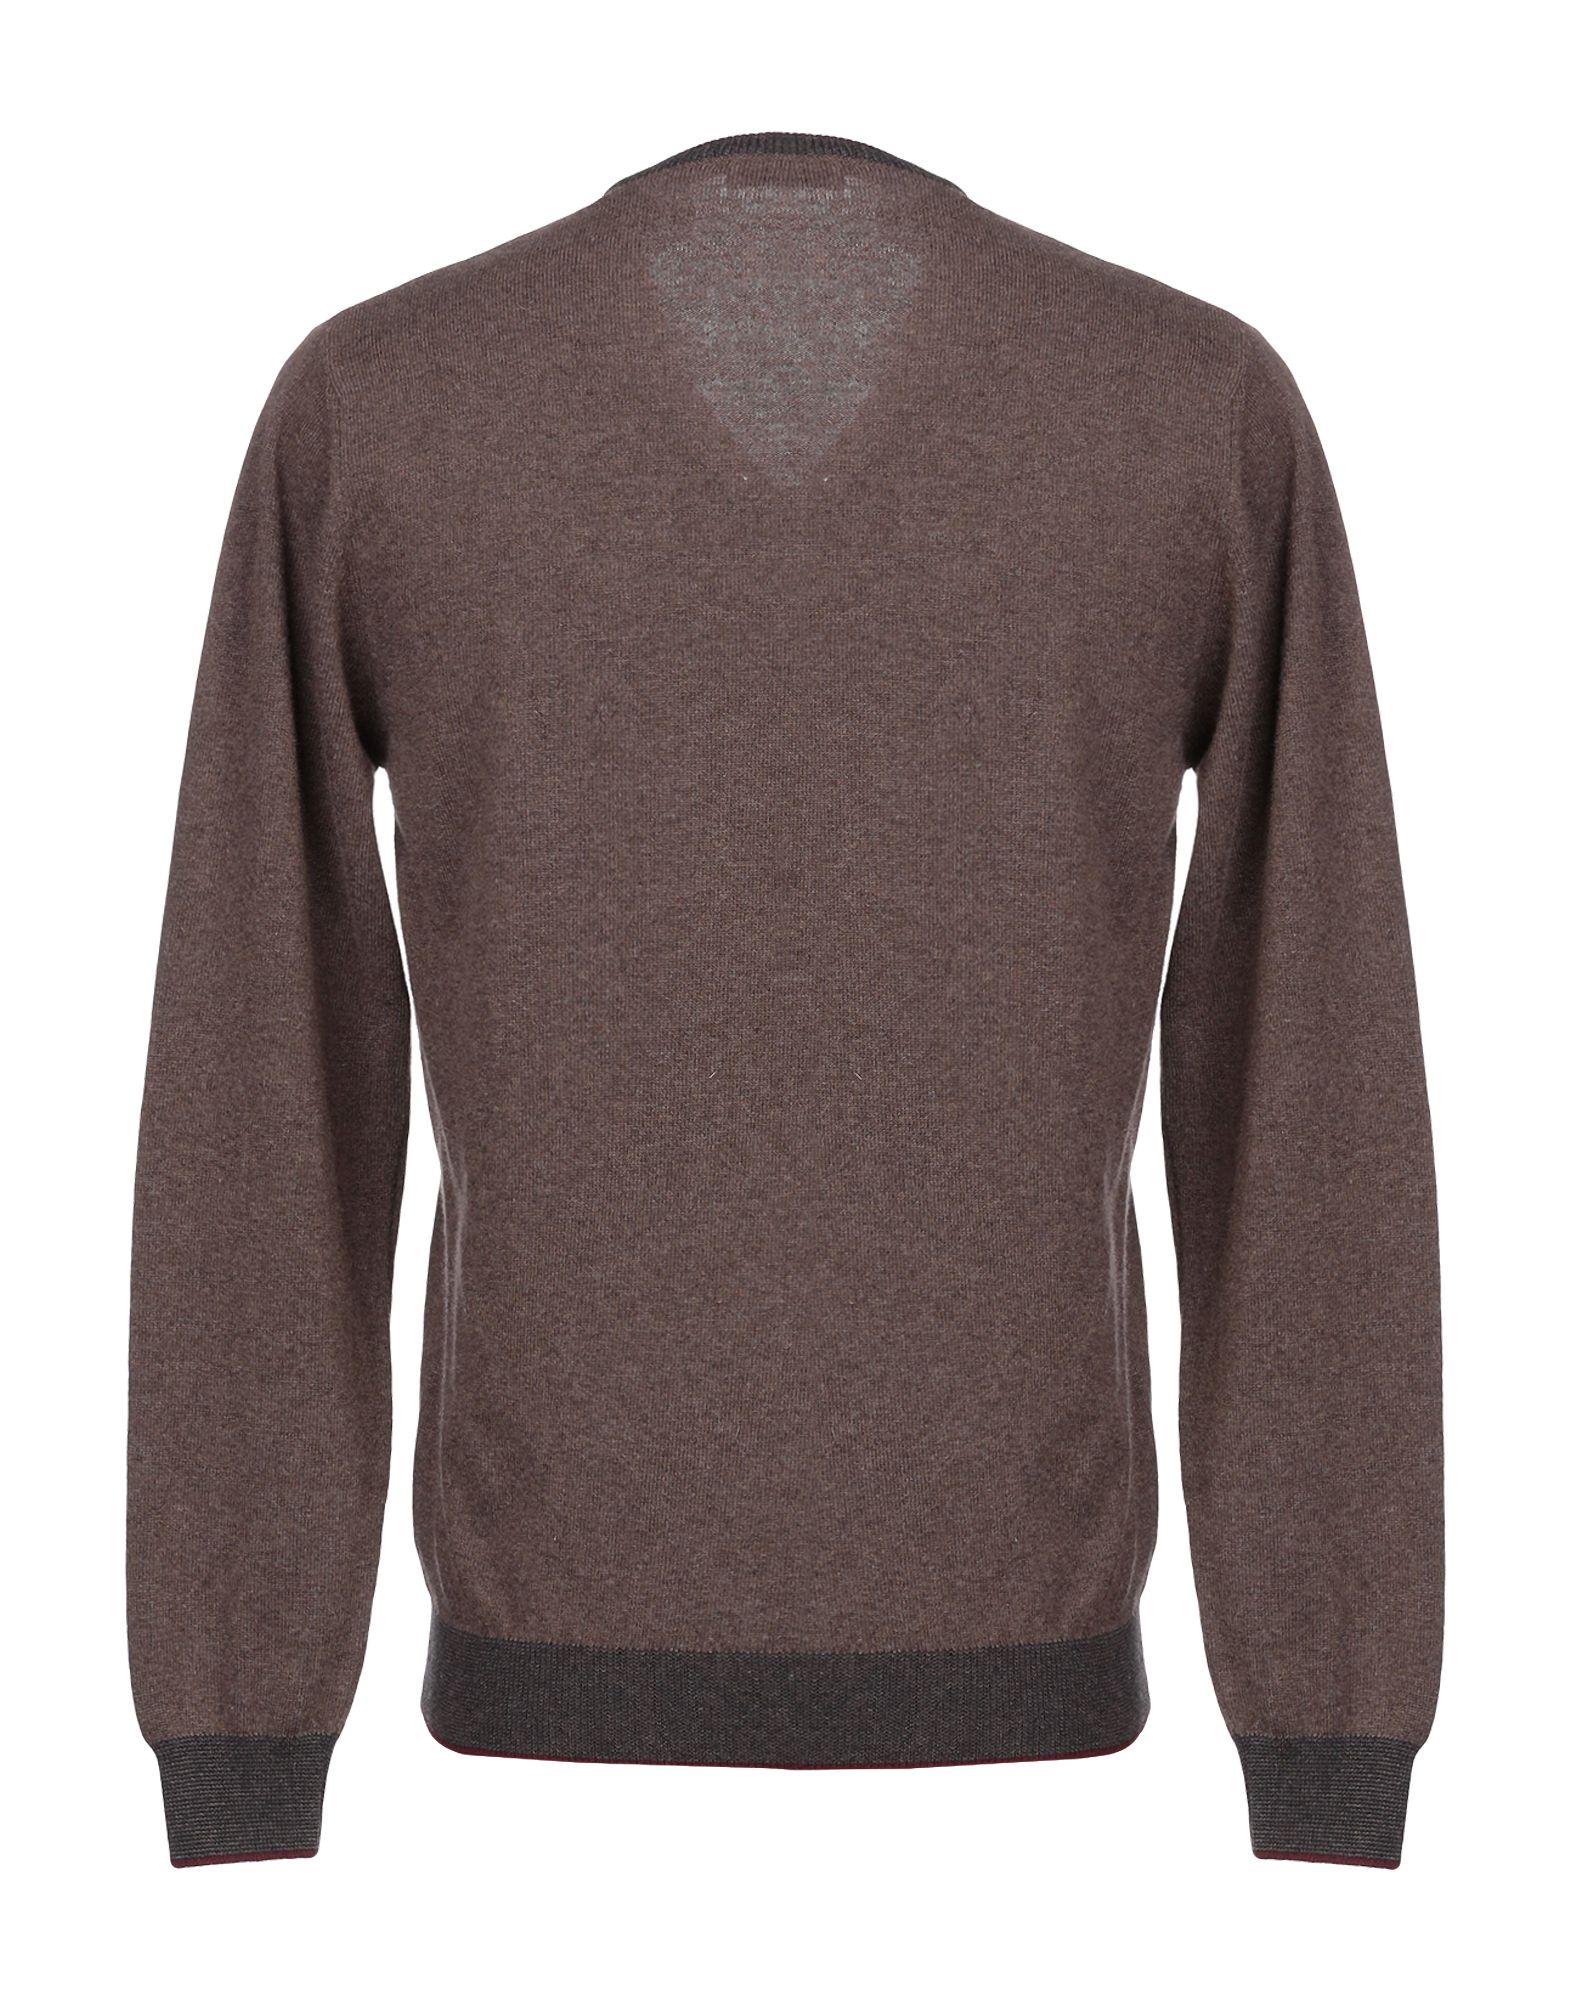 Andrea Fenzi Wool Sweater in Cocoa (Brown) for Men - Lyst